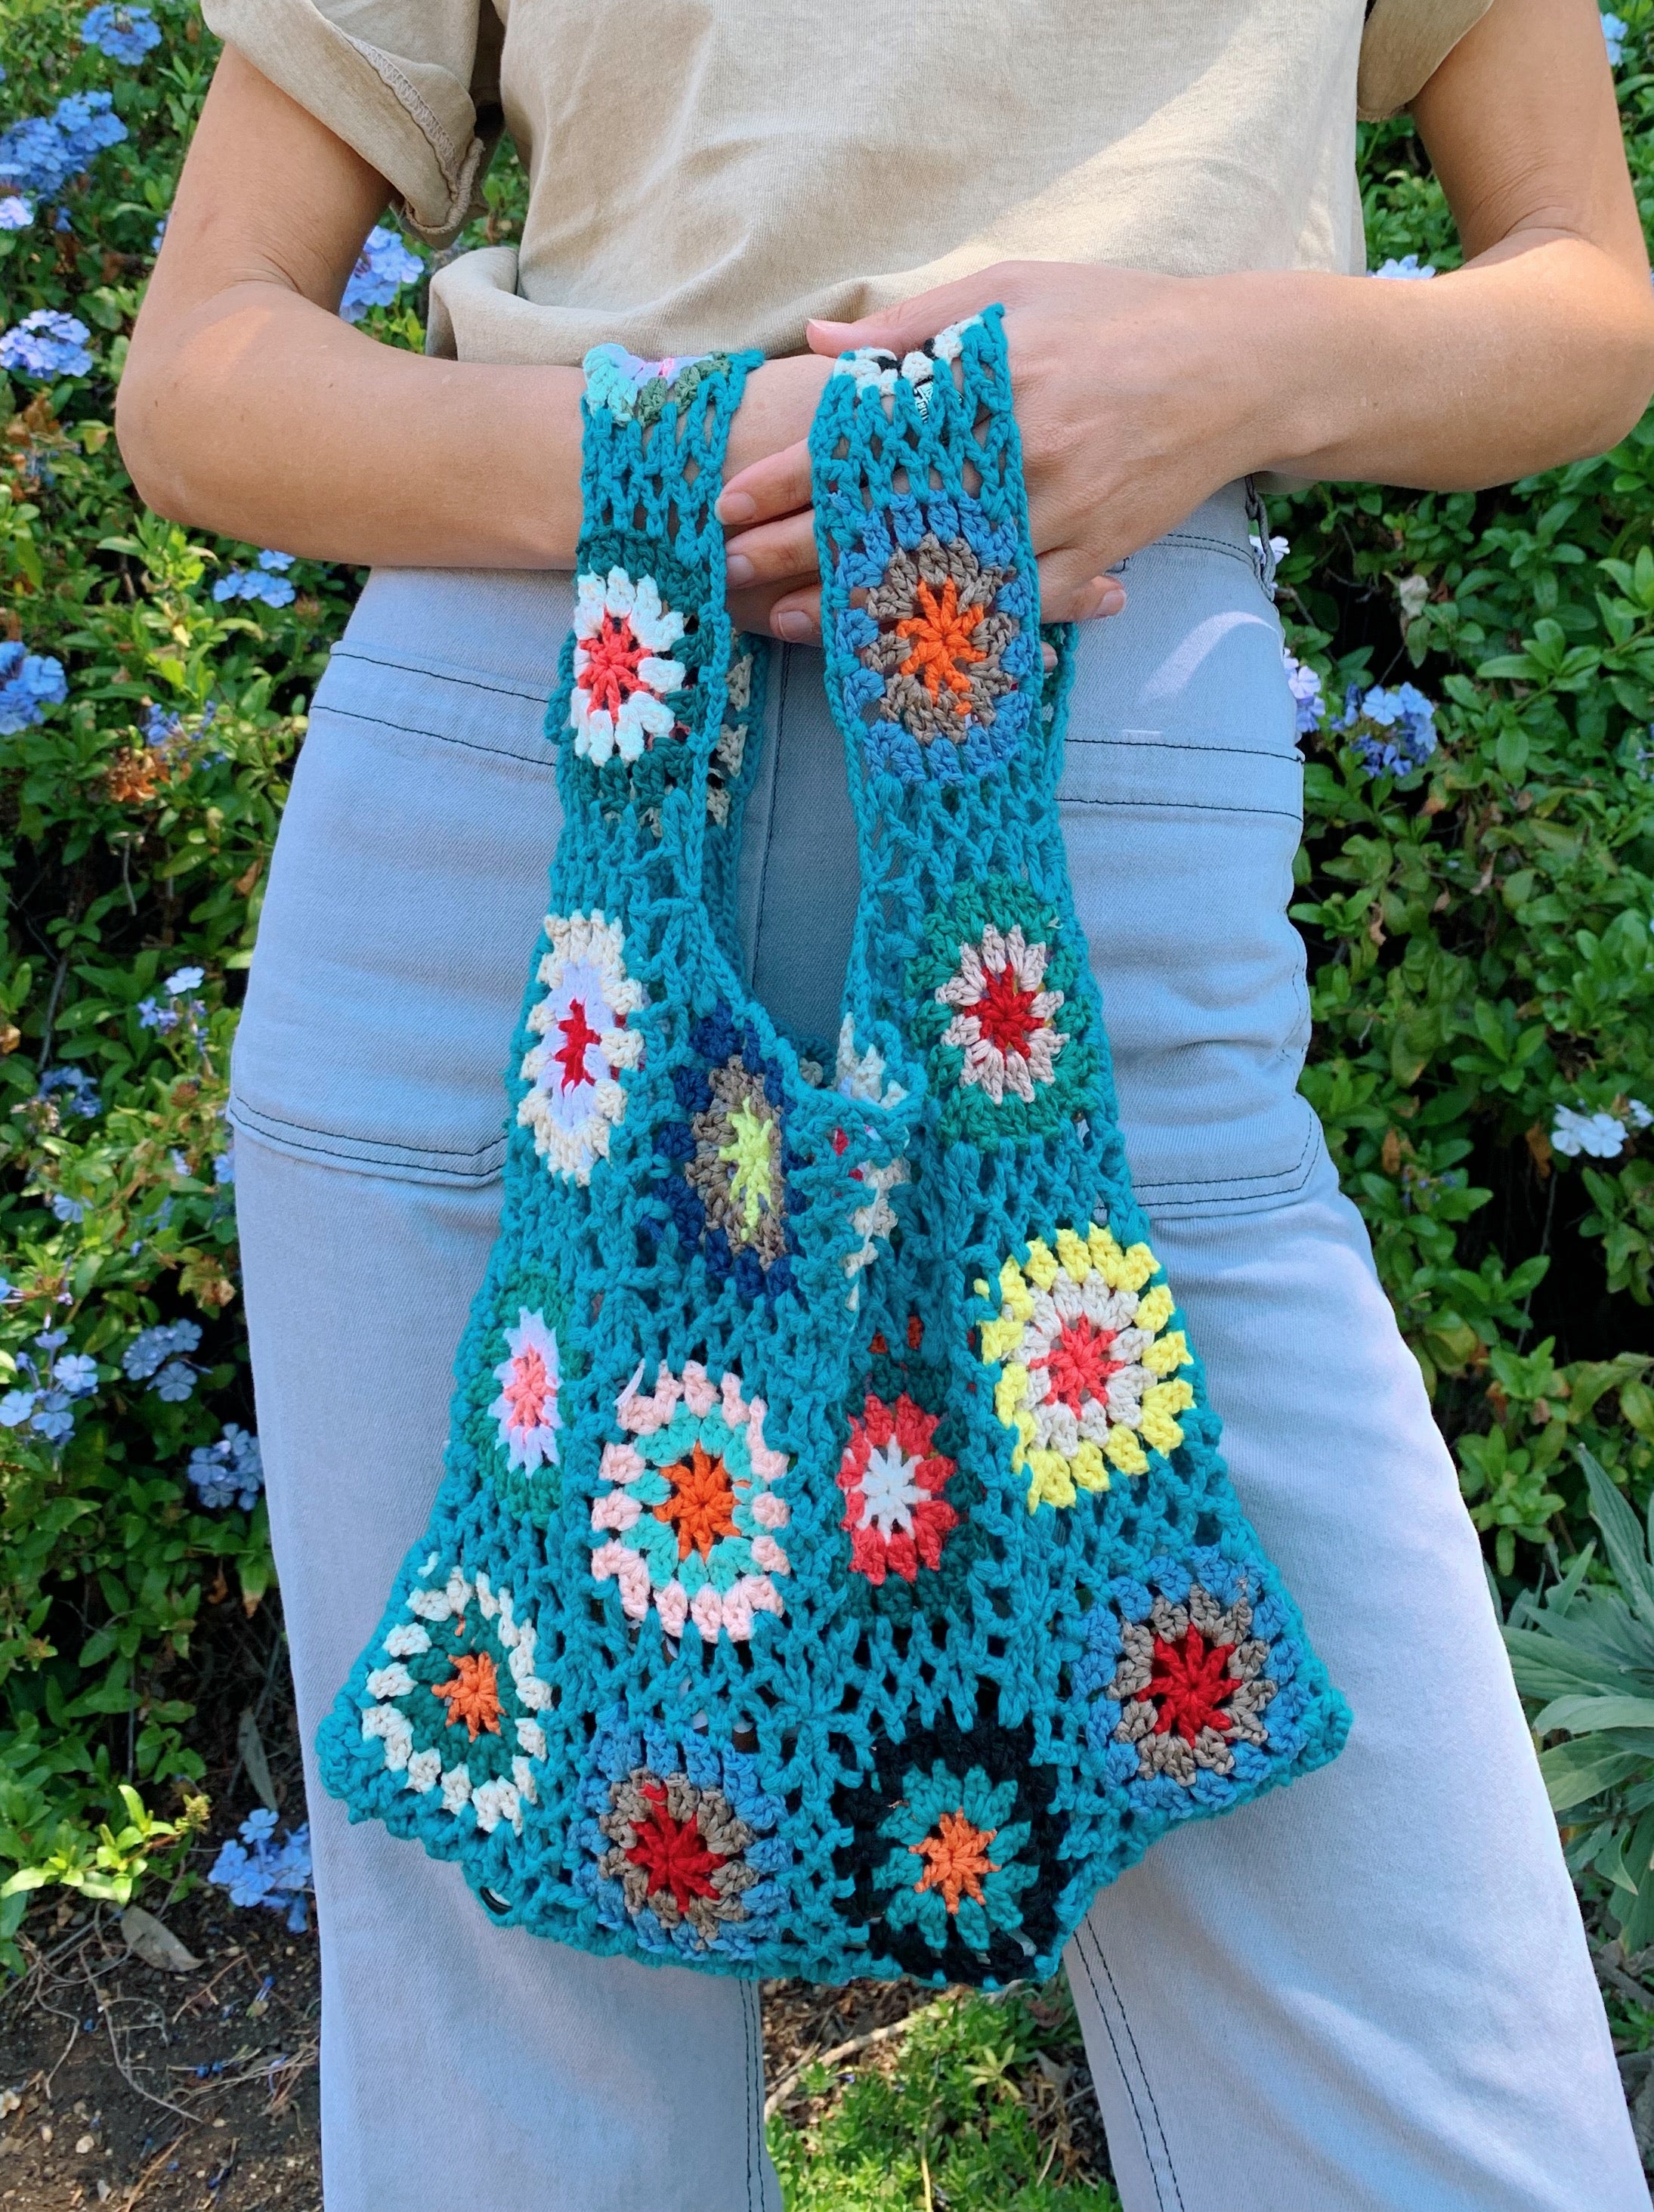 Light Blue Small Crochet Tote Bag